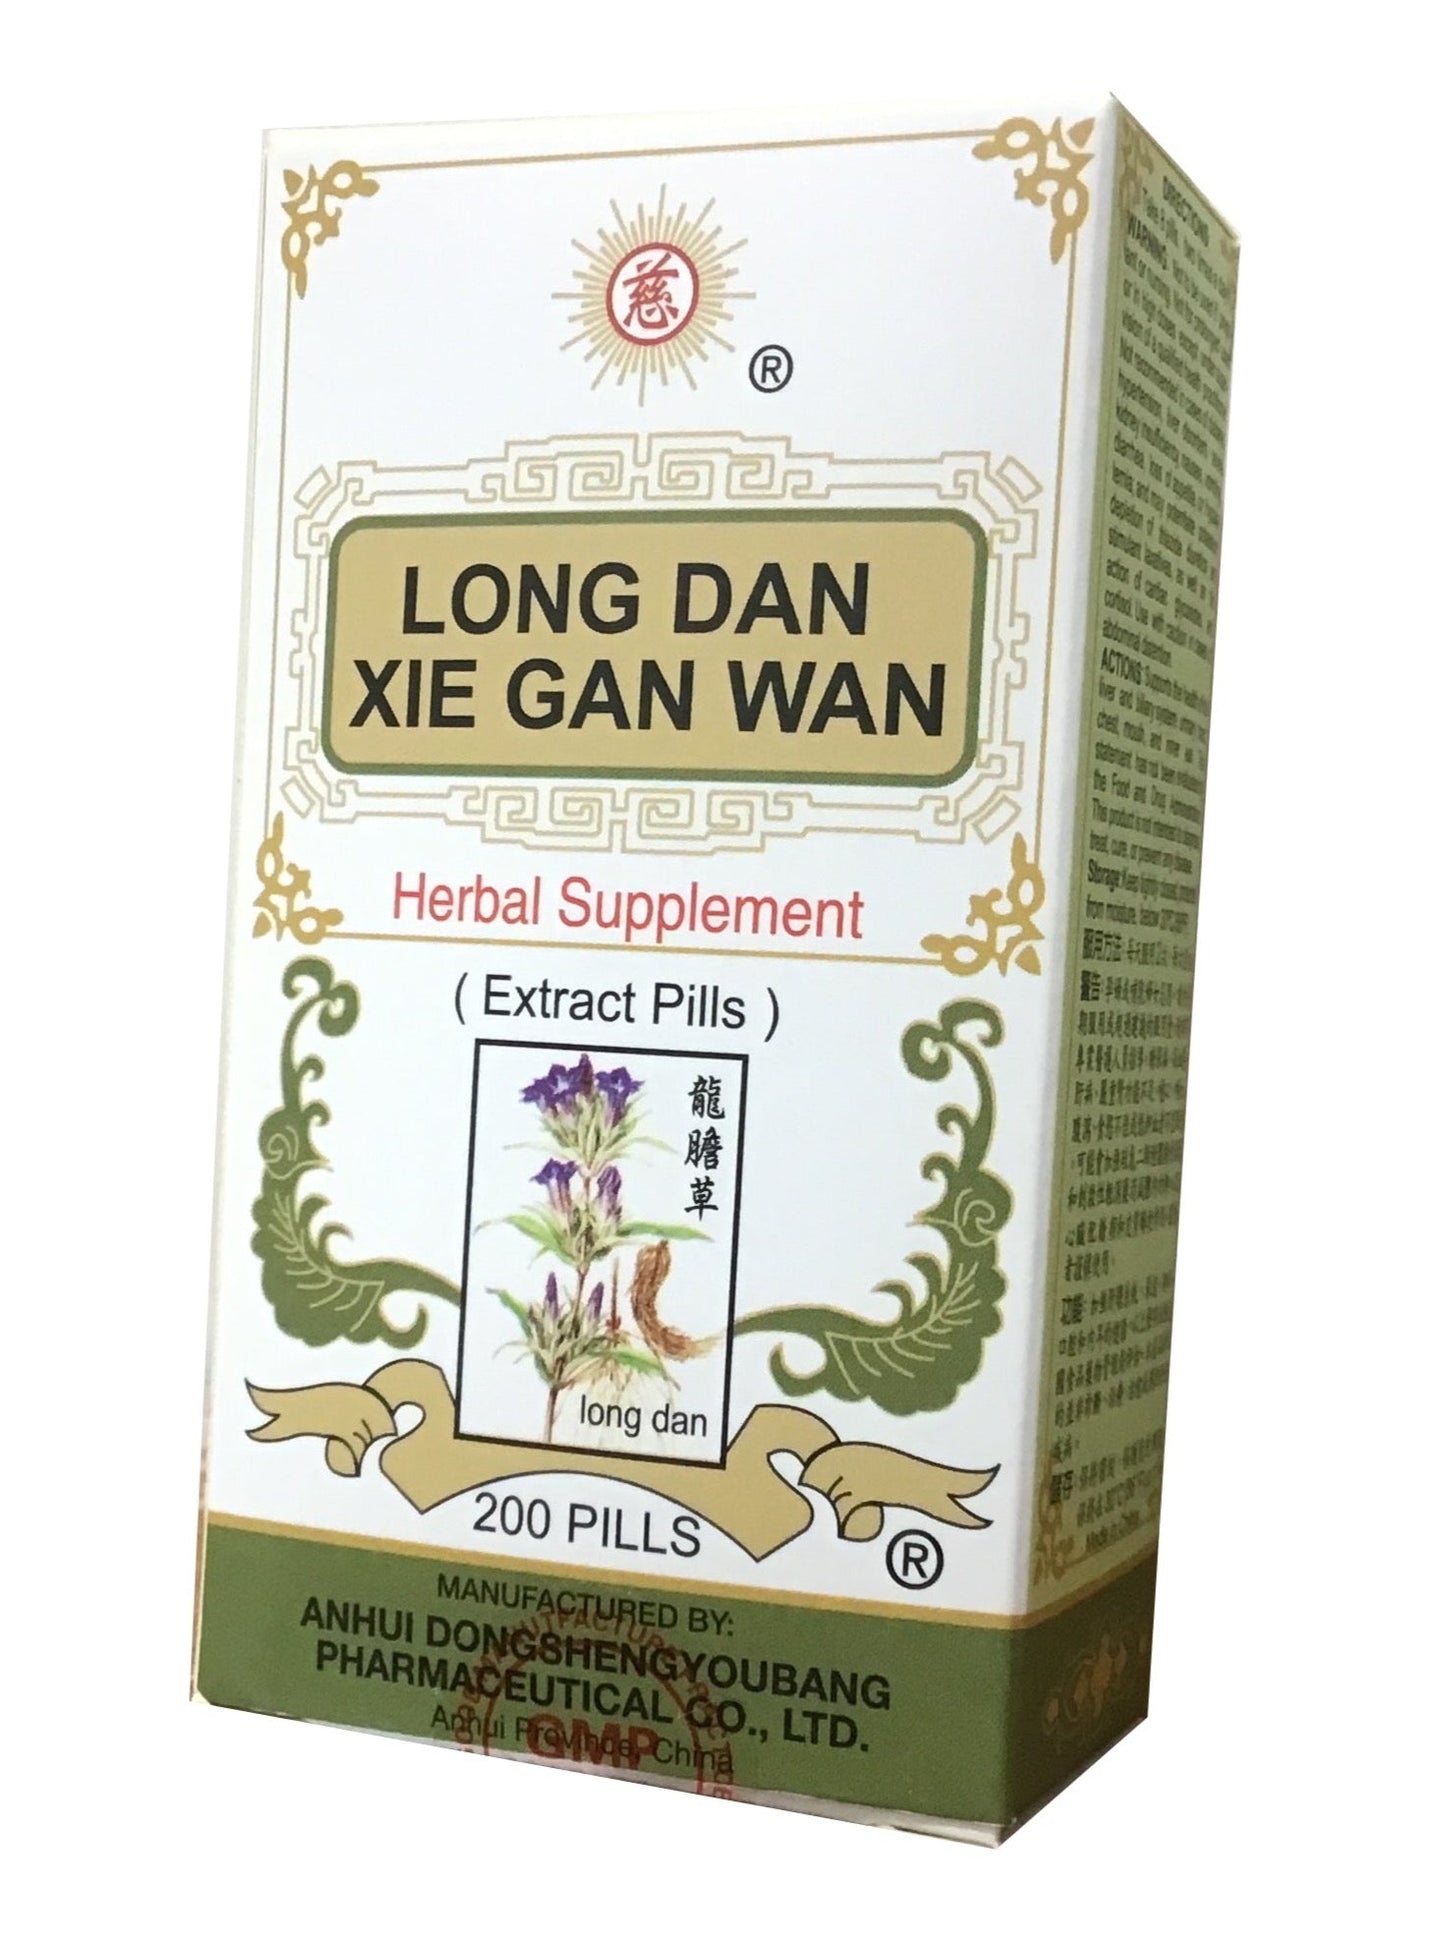 Long Dan Xie Gan Wan (200 Pills) 慈牌 龍膽瀉肝丸 (200粒)